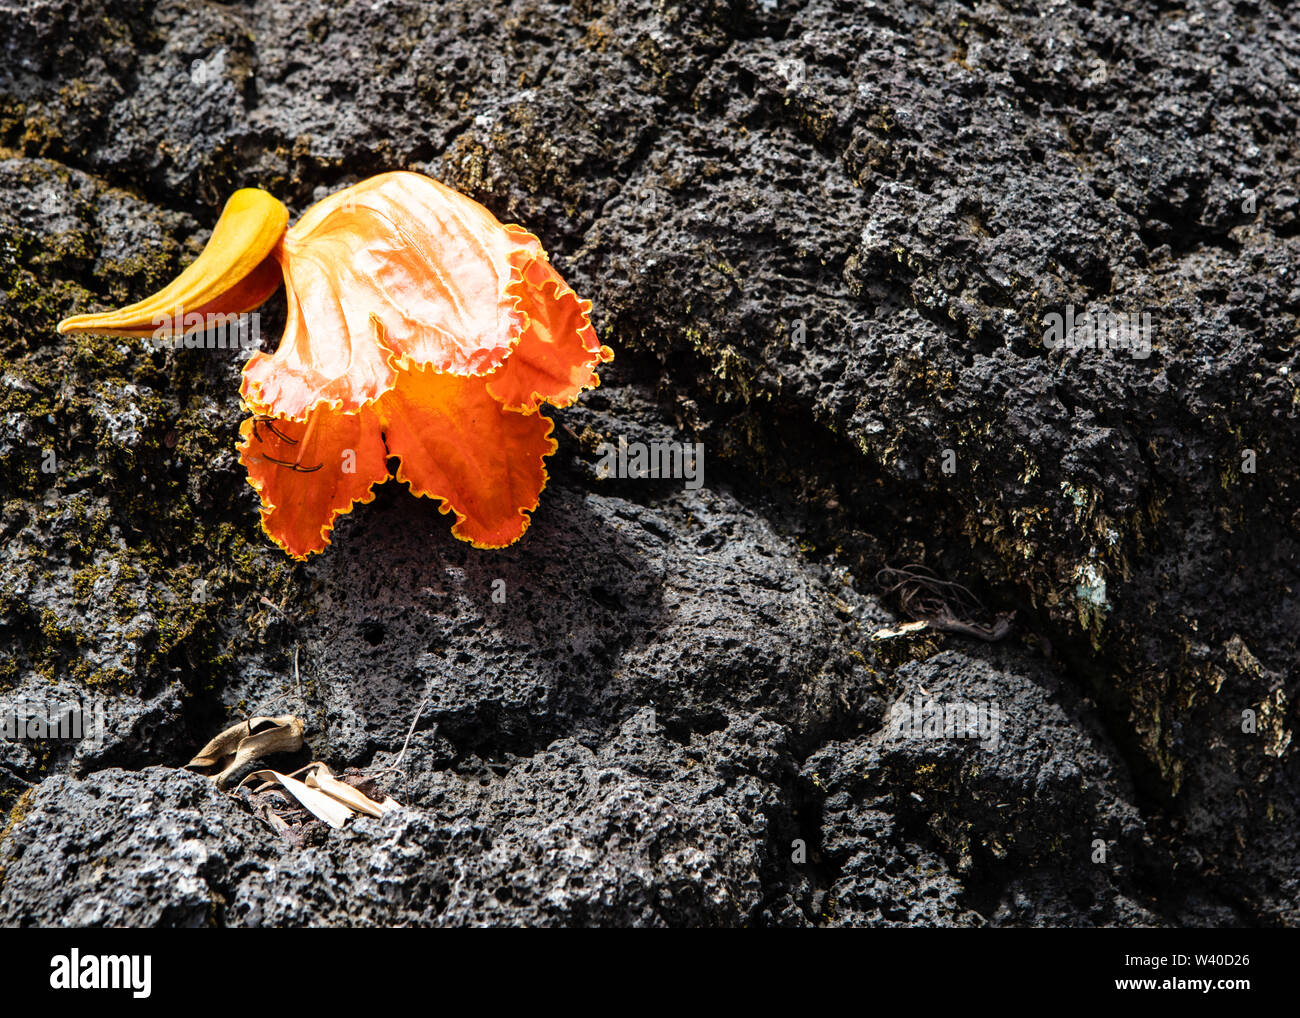 A bright orange flower blossom dropped on a black lava rock Stock Photo